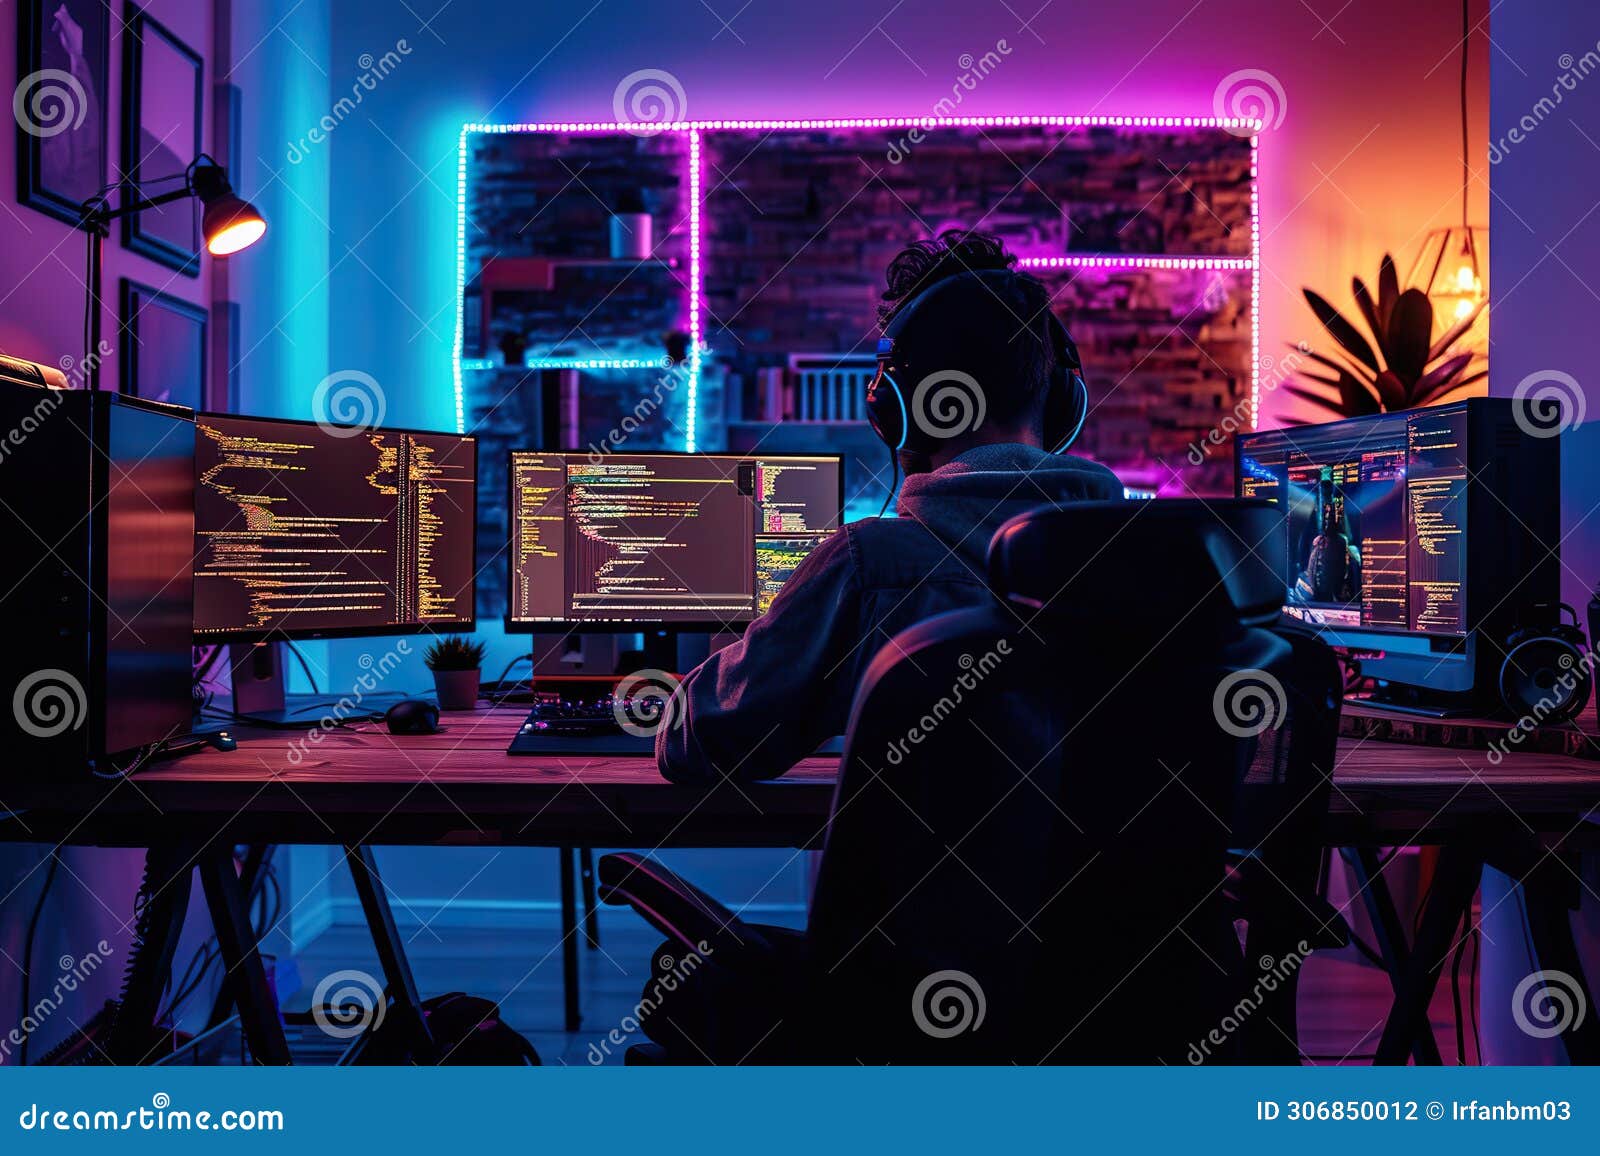 coding intensity: it developer immersed in online software firmware creation under neon glow